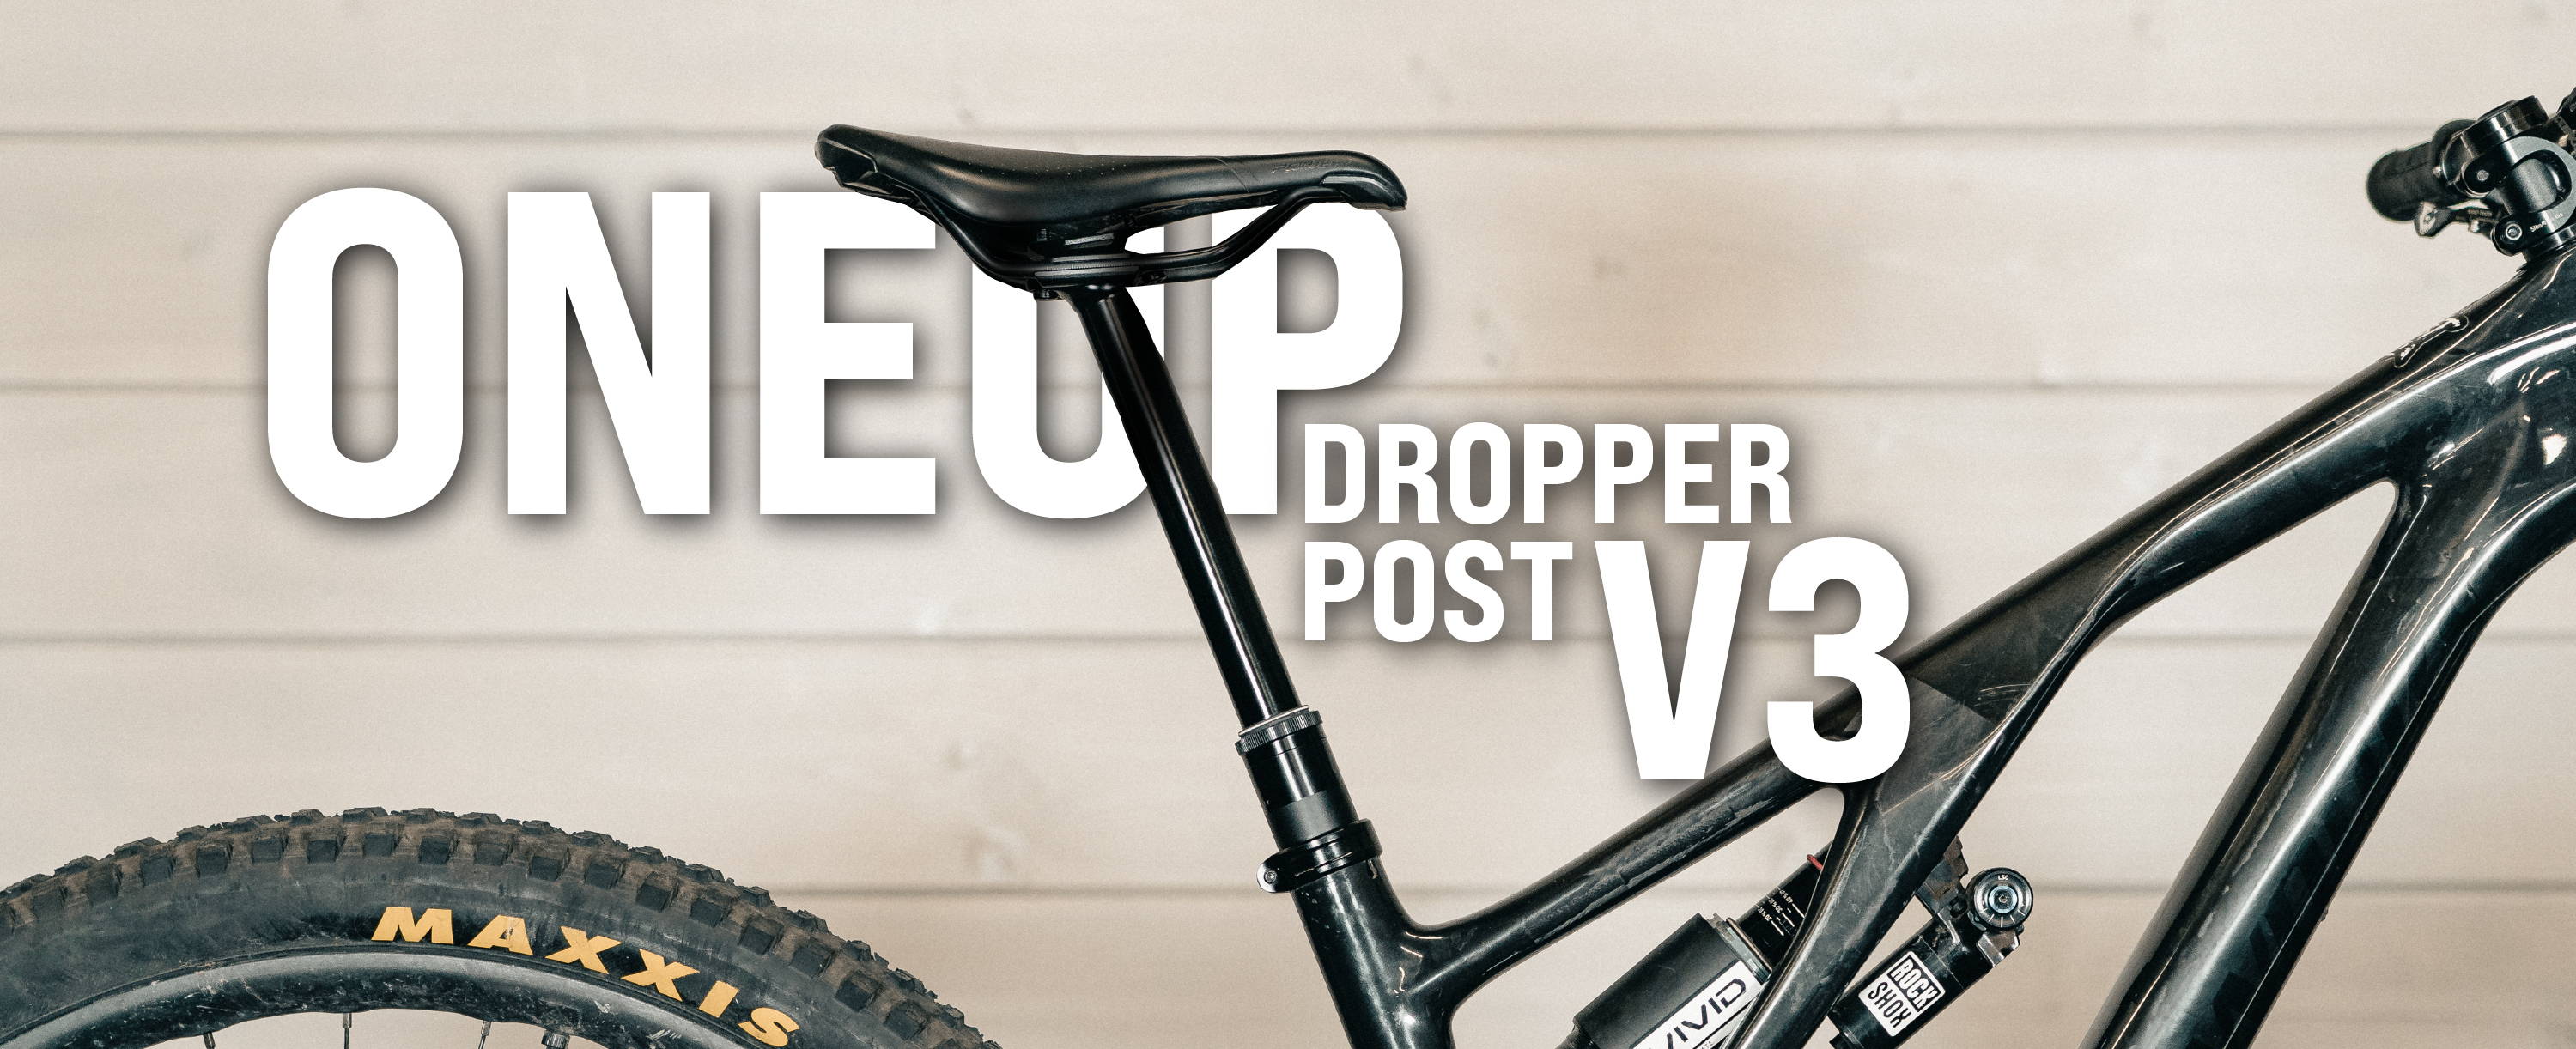 oneup dropper post v3 installed on specialized stumpjumper evo